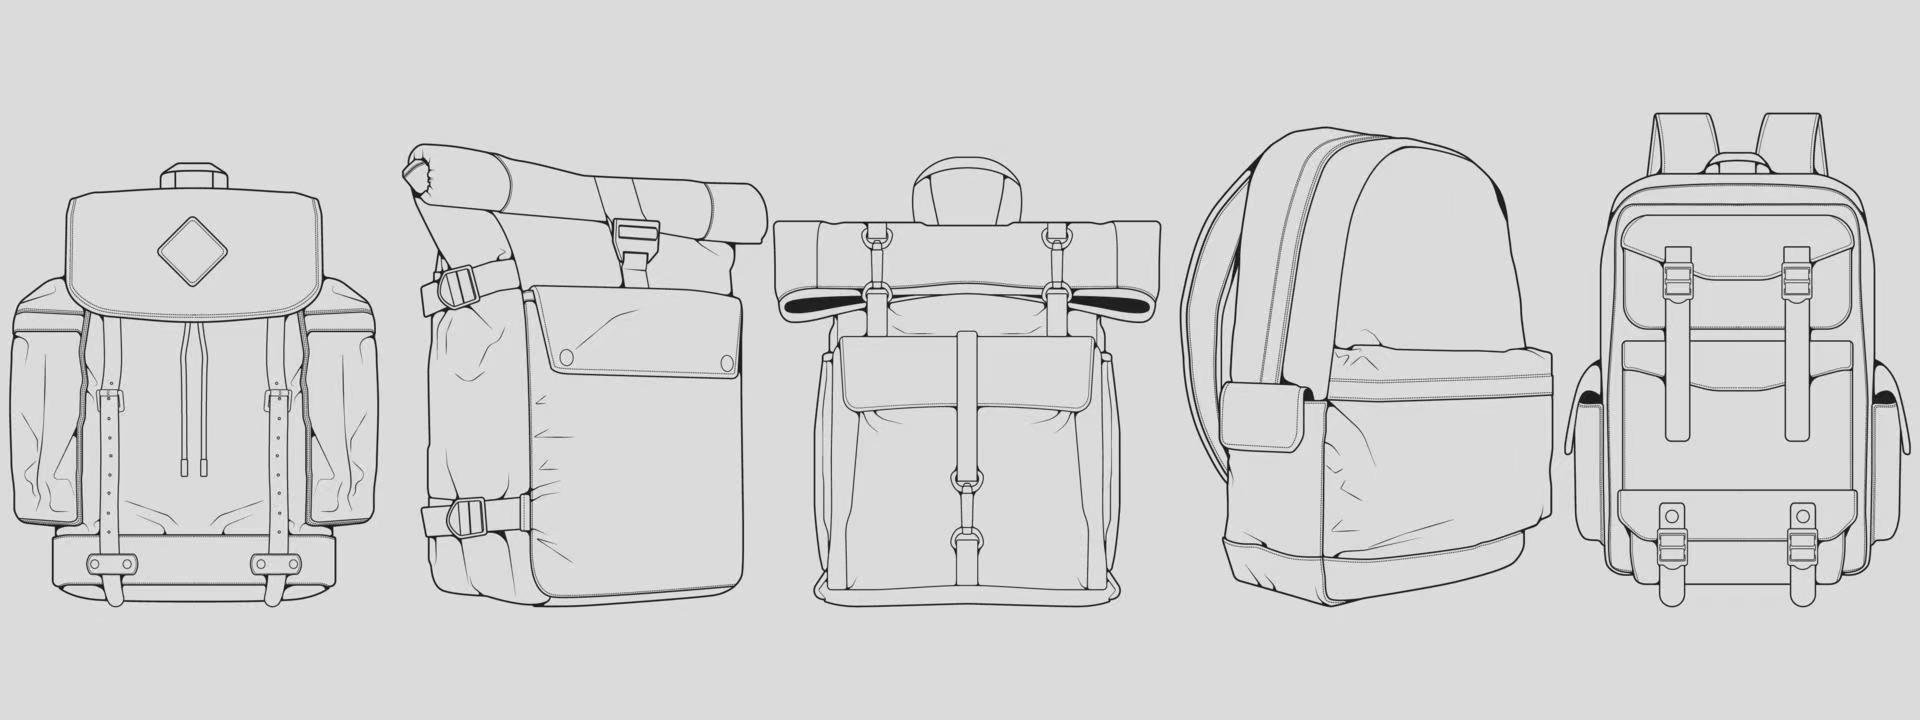 backpack designs